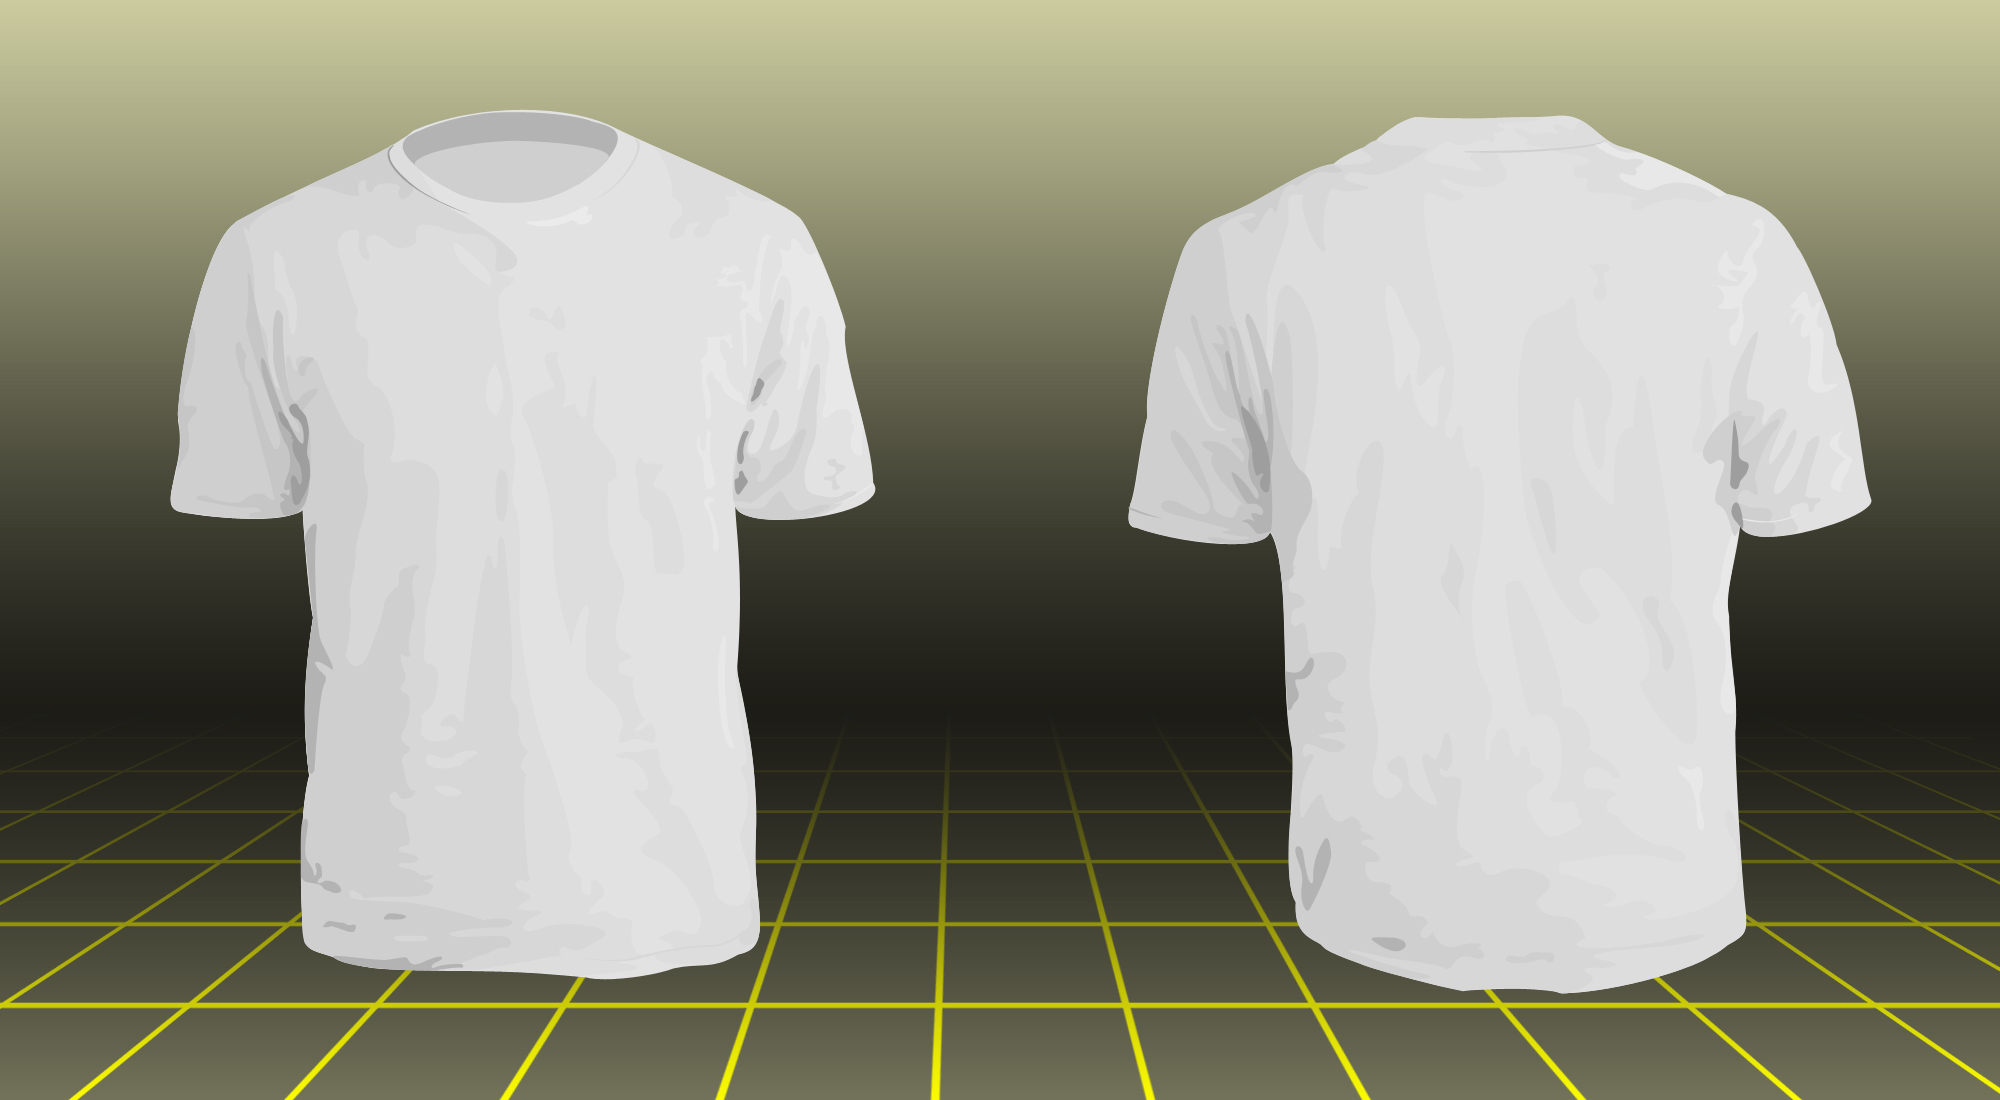 Blank T-Shirt - White 001 by angelaacevedo on DeviantArt